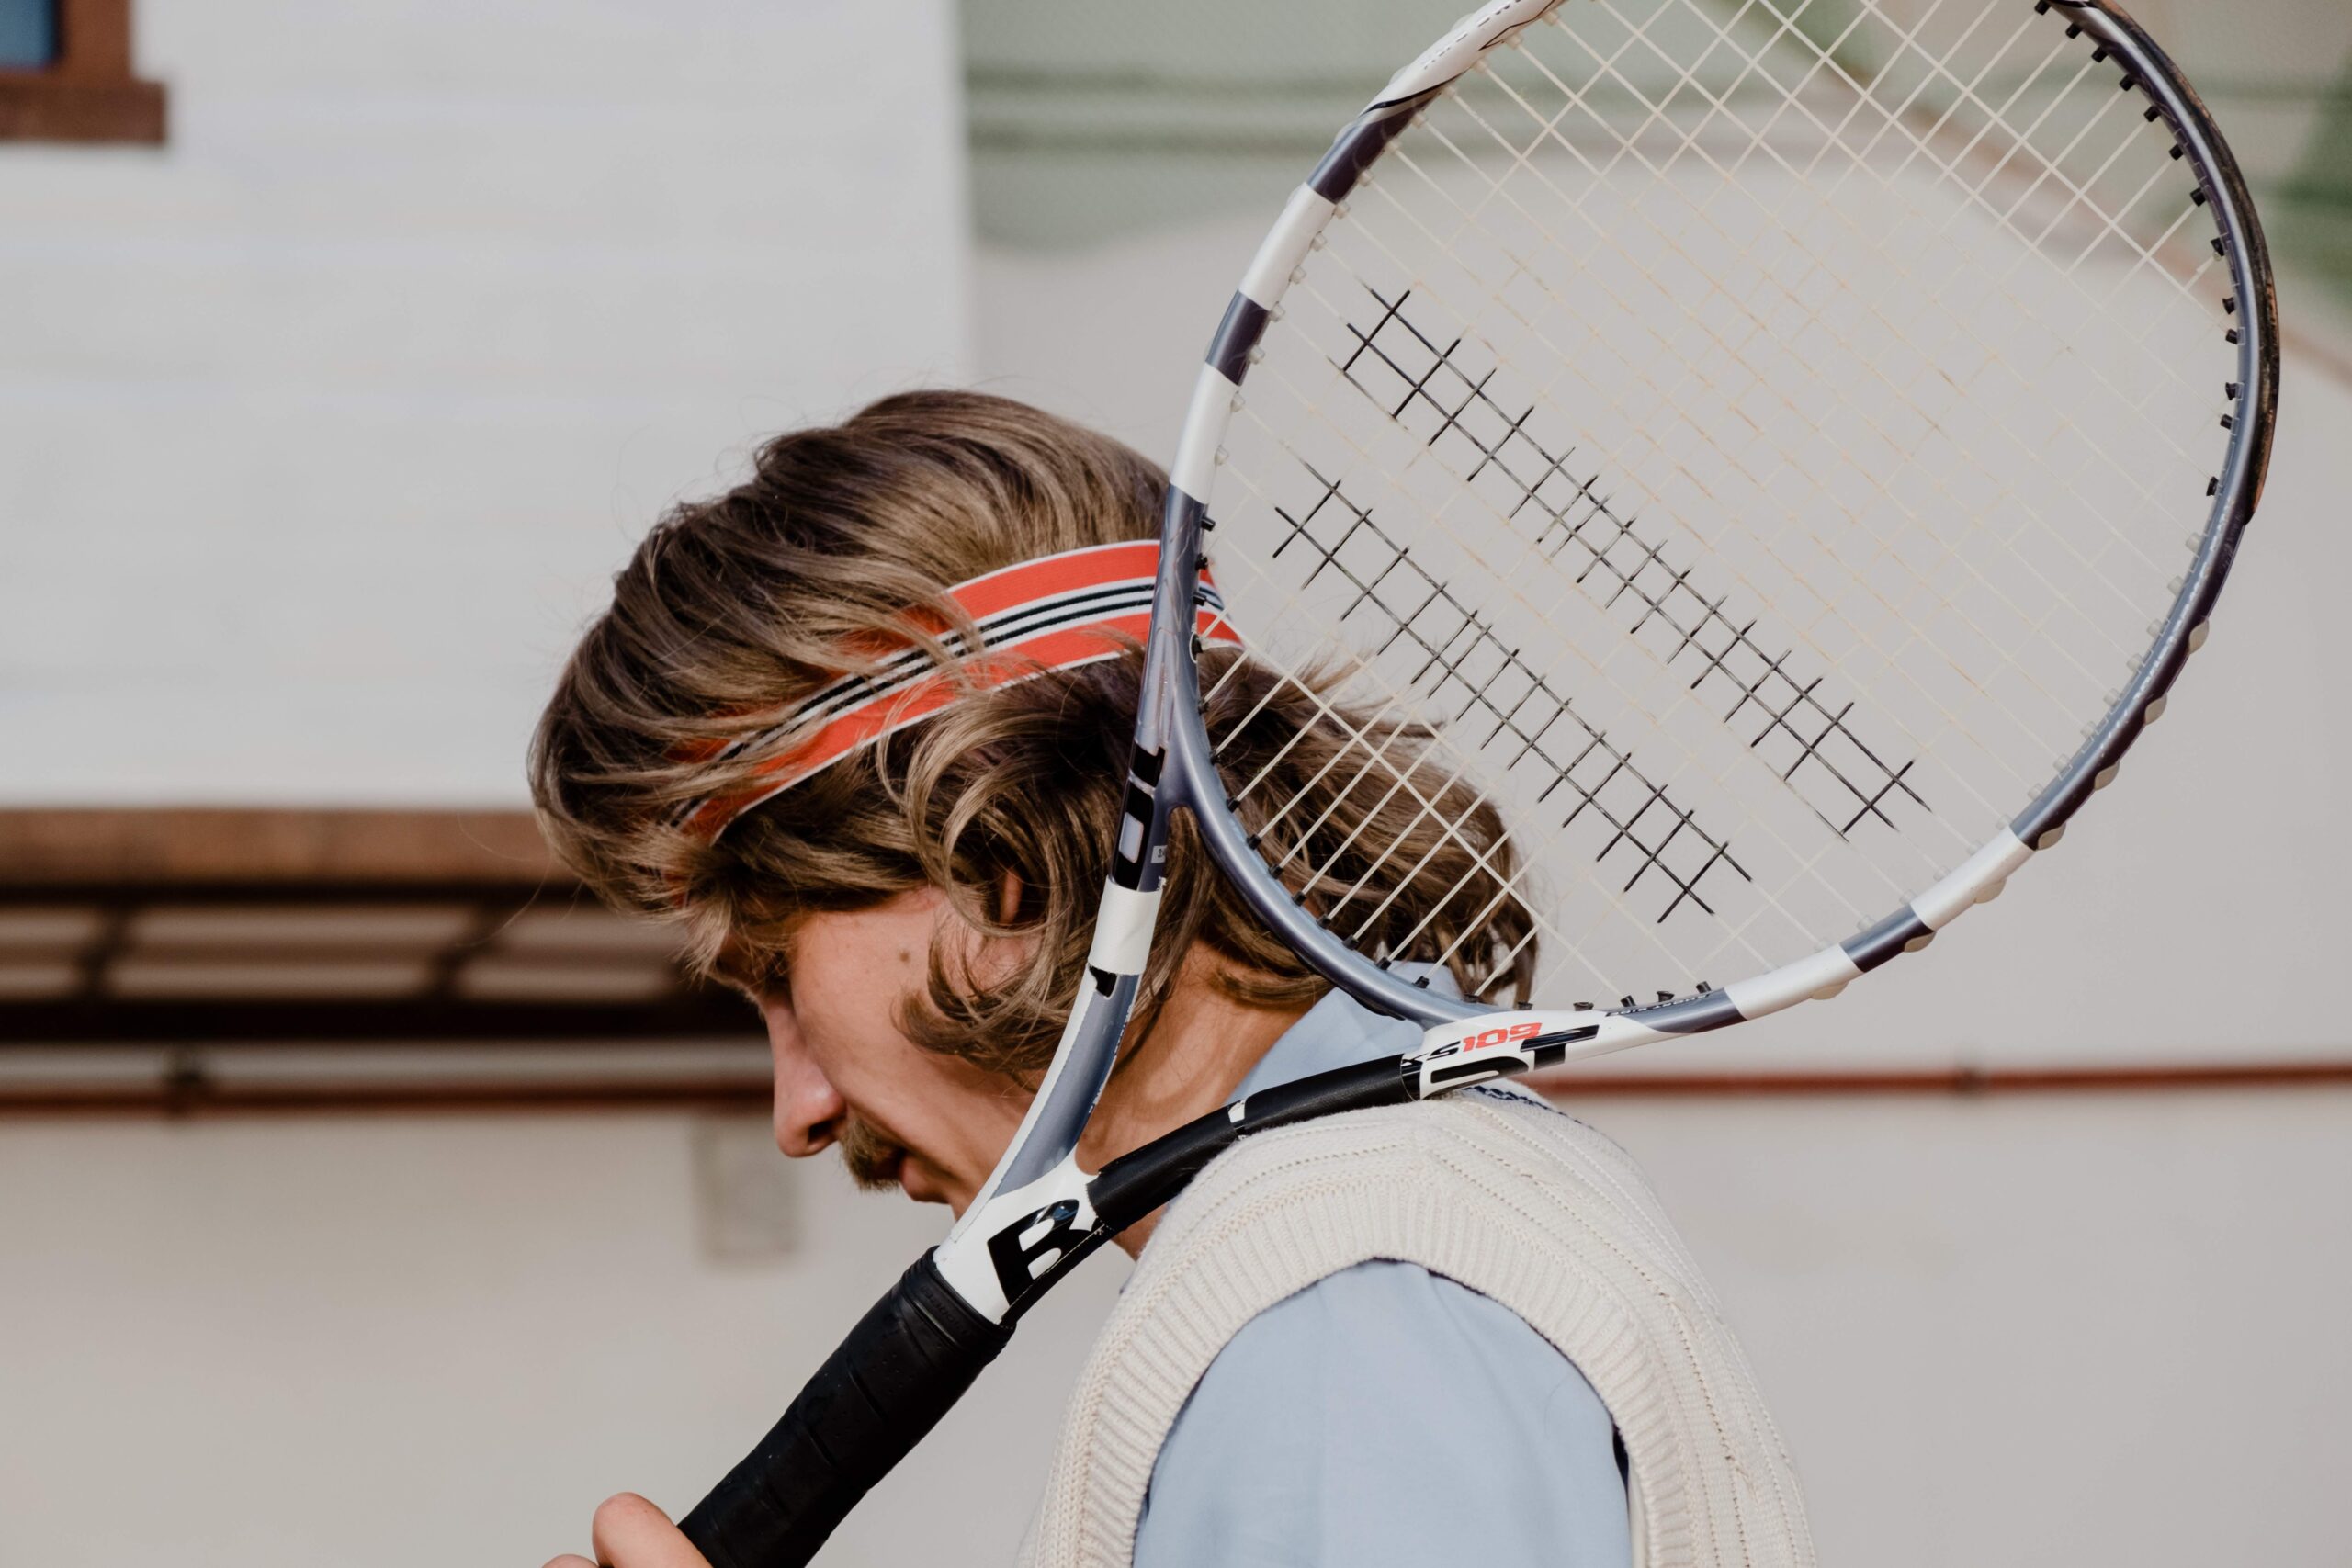 tennis player wearing sweatband